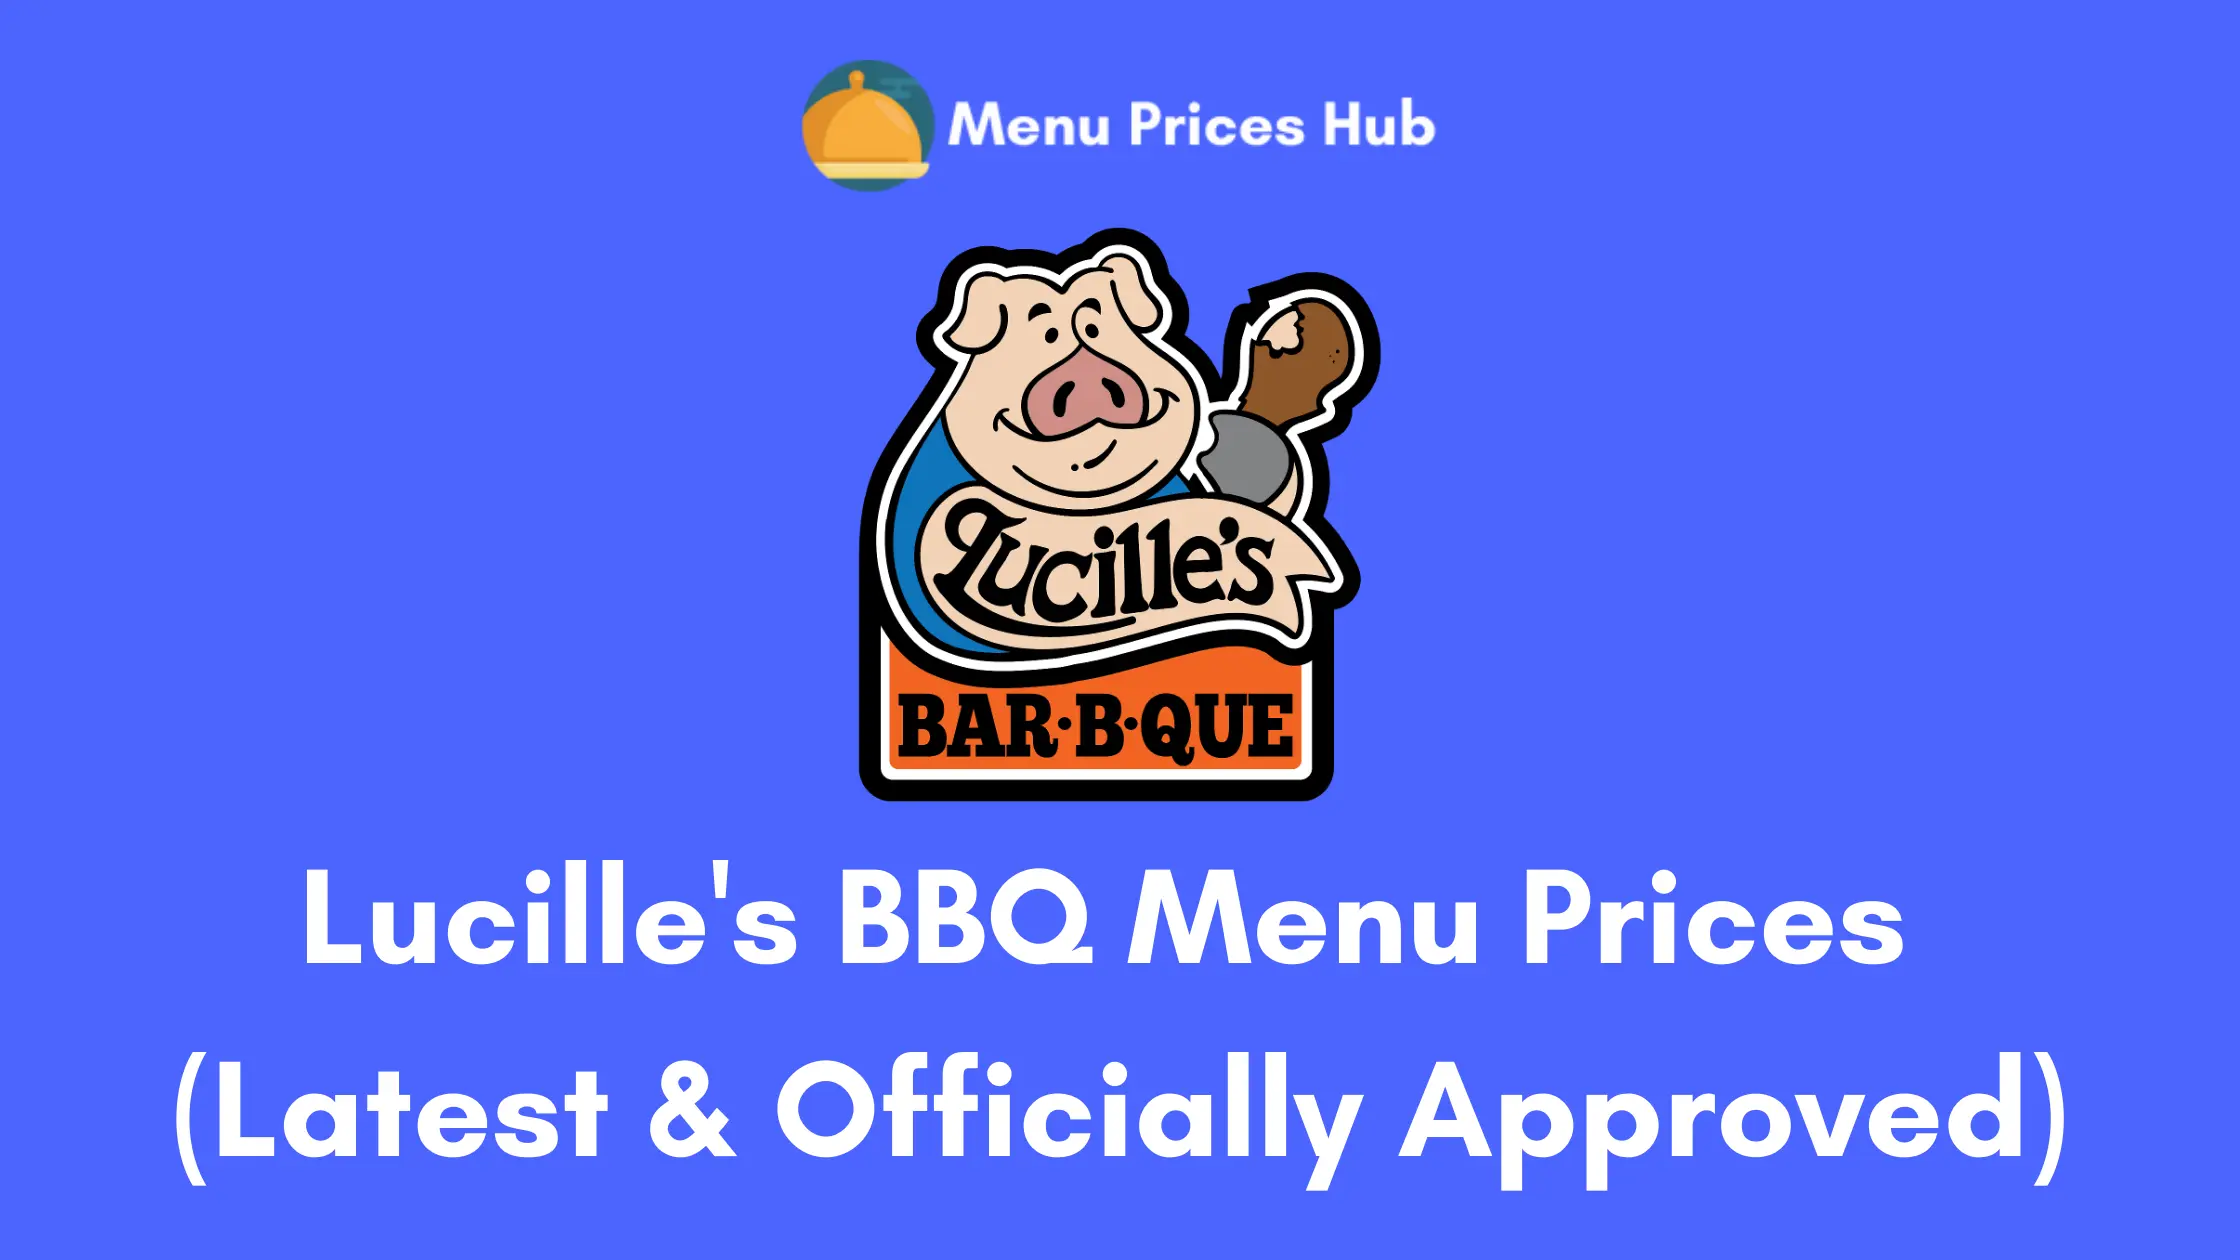 Lucille’s BBQ Menu Prices